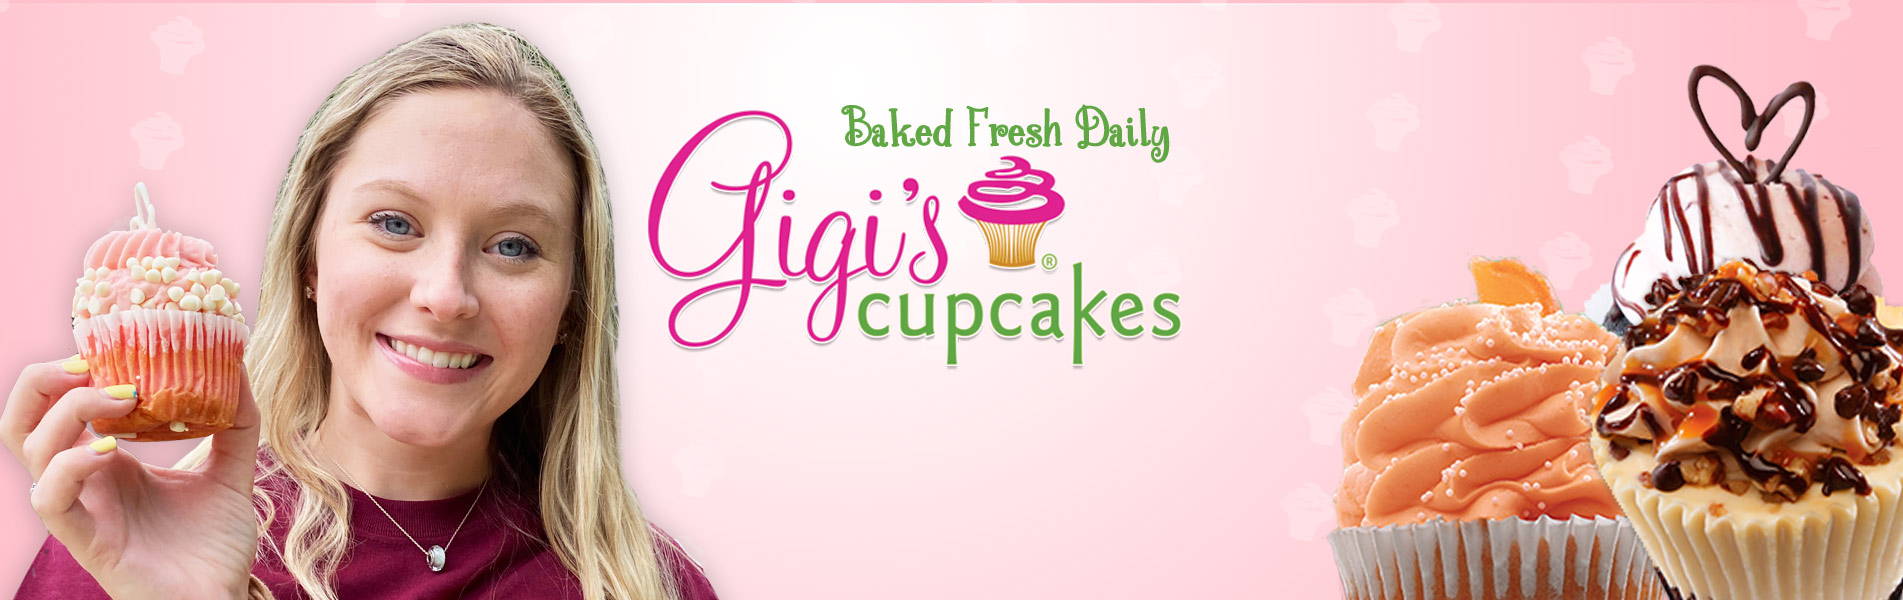 GiGi's Cupdakes - Fresh Bakes Daily